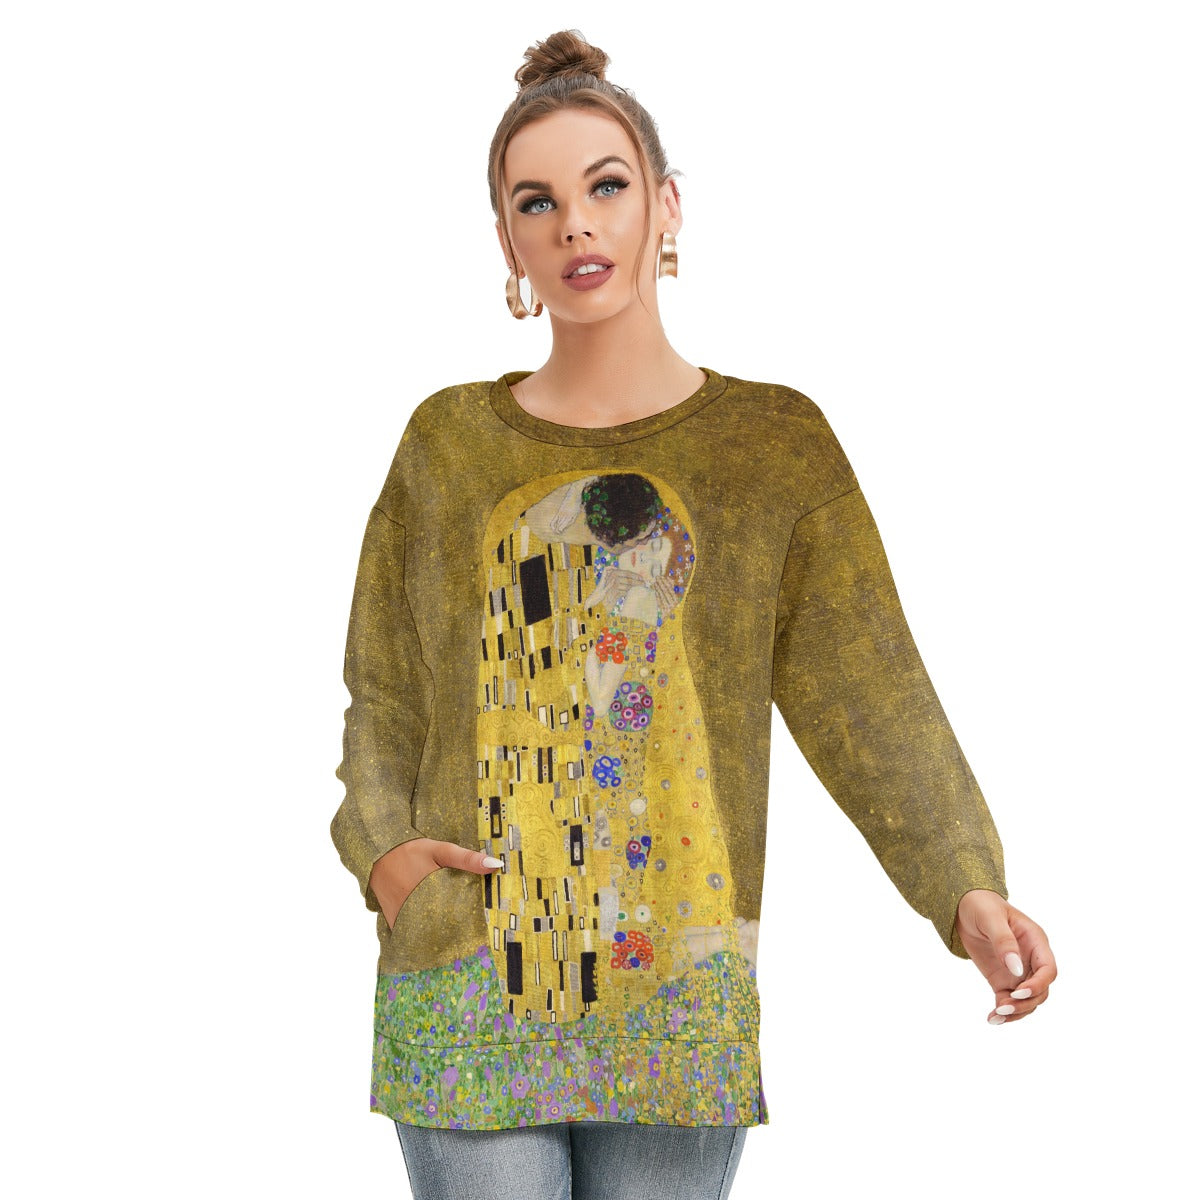 Klimt Inspired Clothing